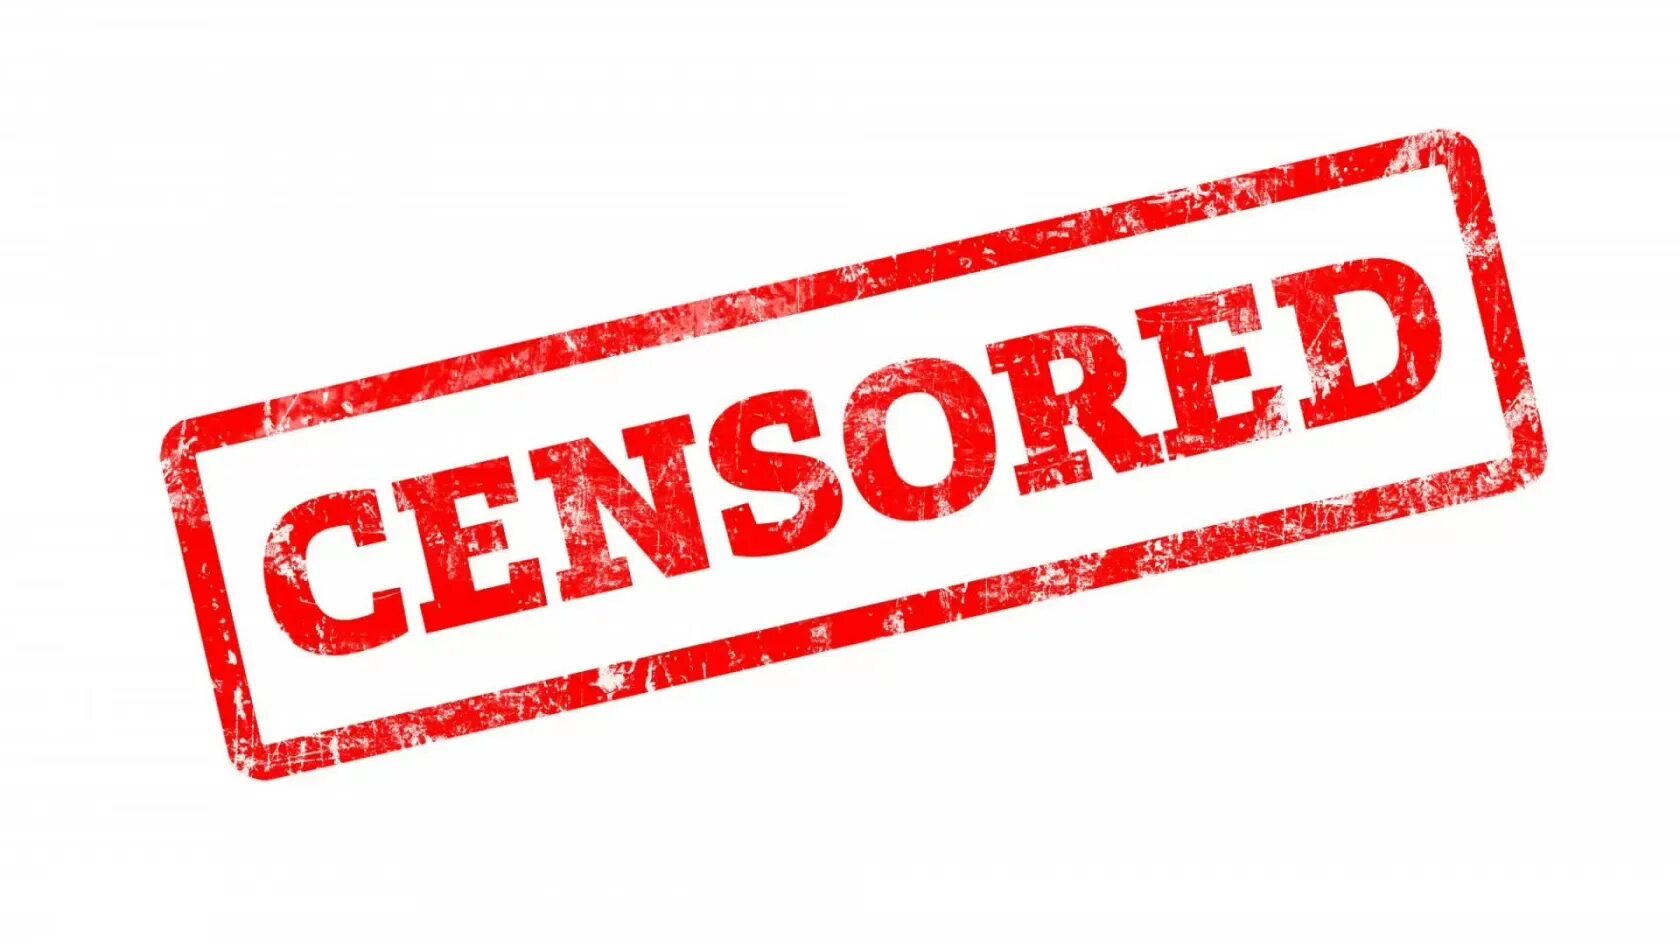 Цензура видео. Красный штамп. Цензура картинка. Censored штампик. Печать цензура.